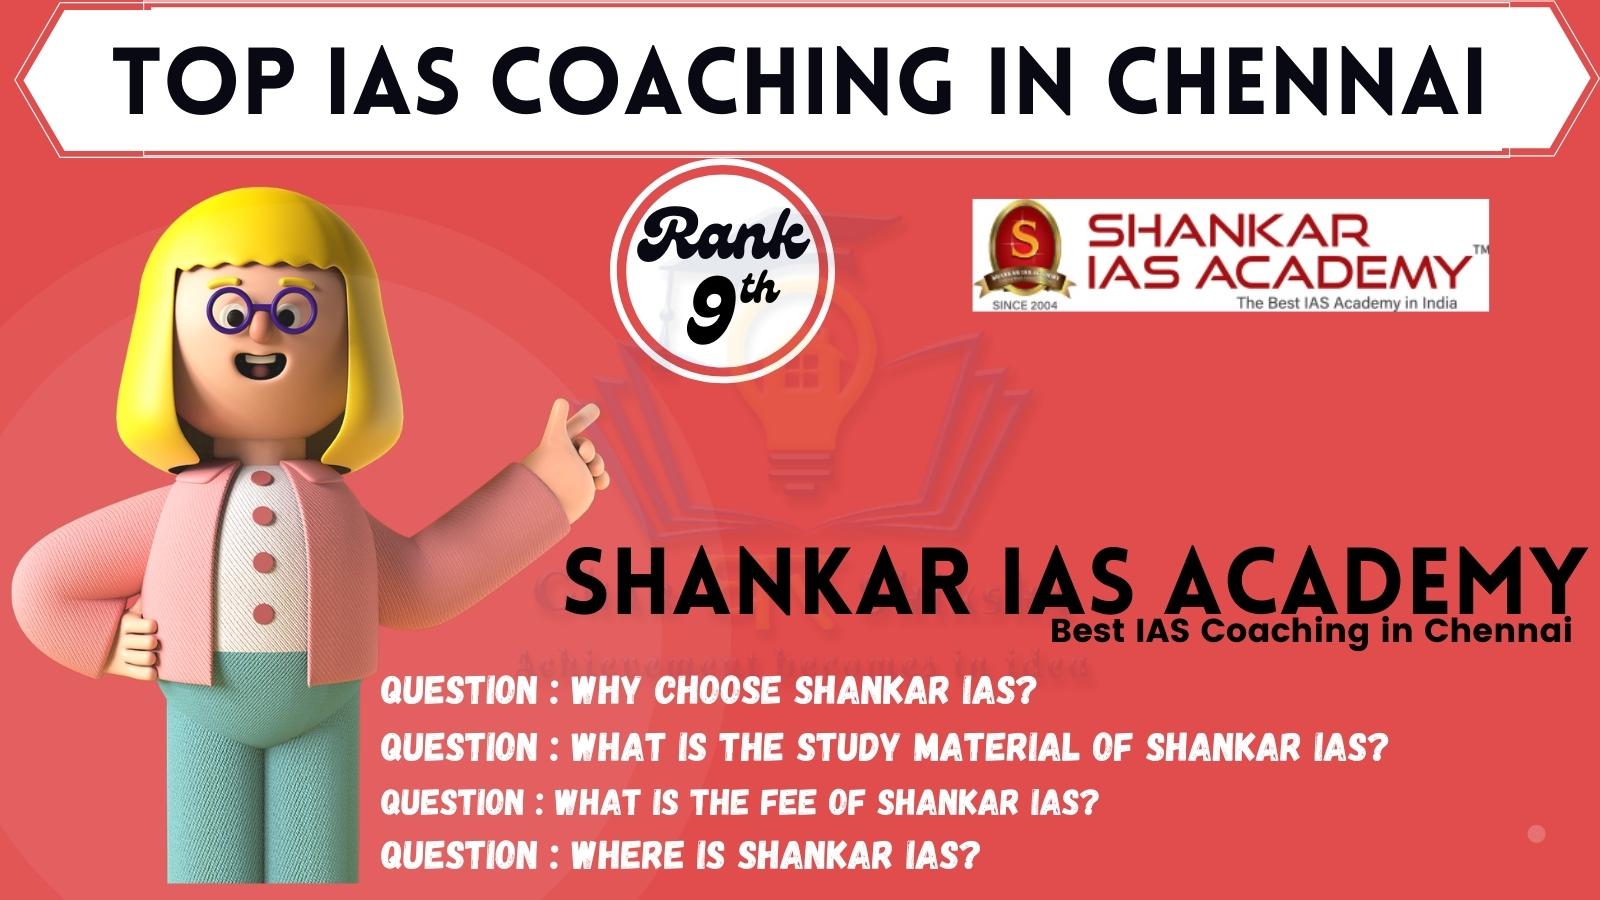 Shankar IAS Academy In Chennai